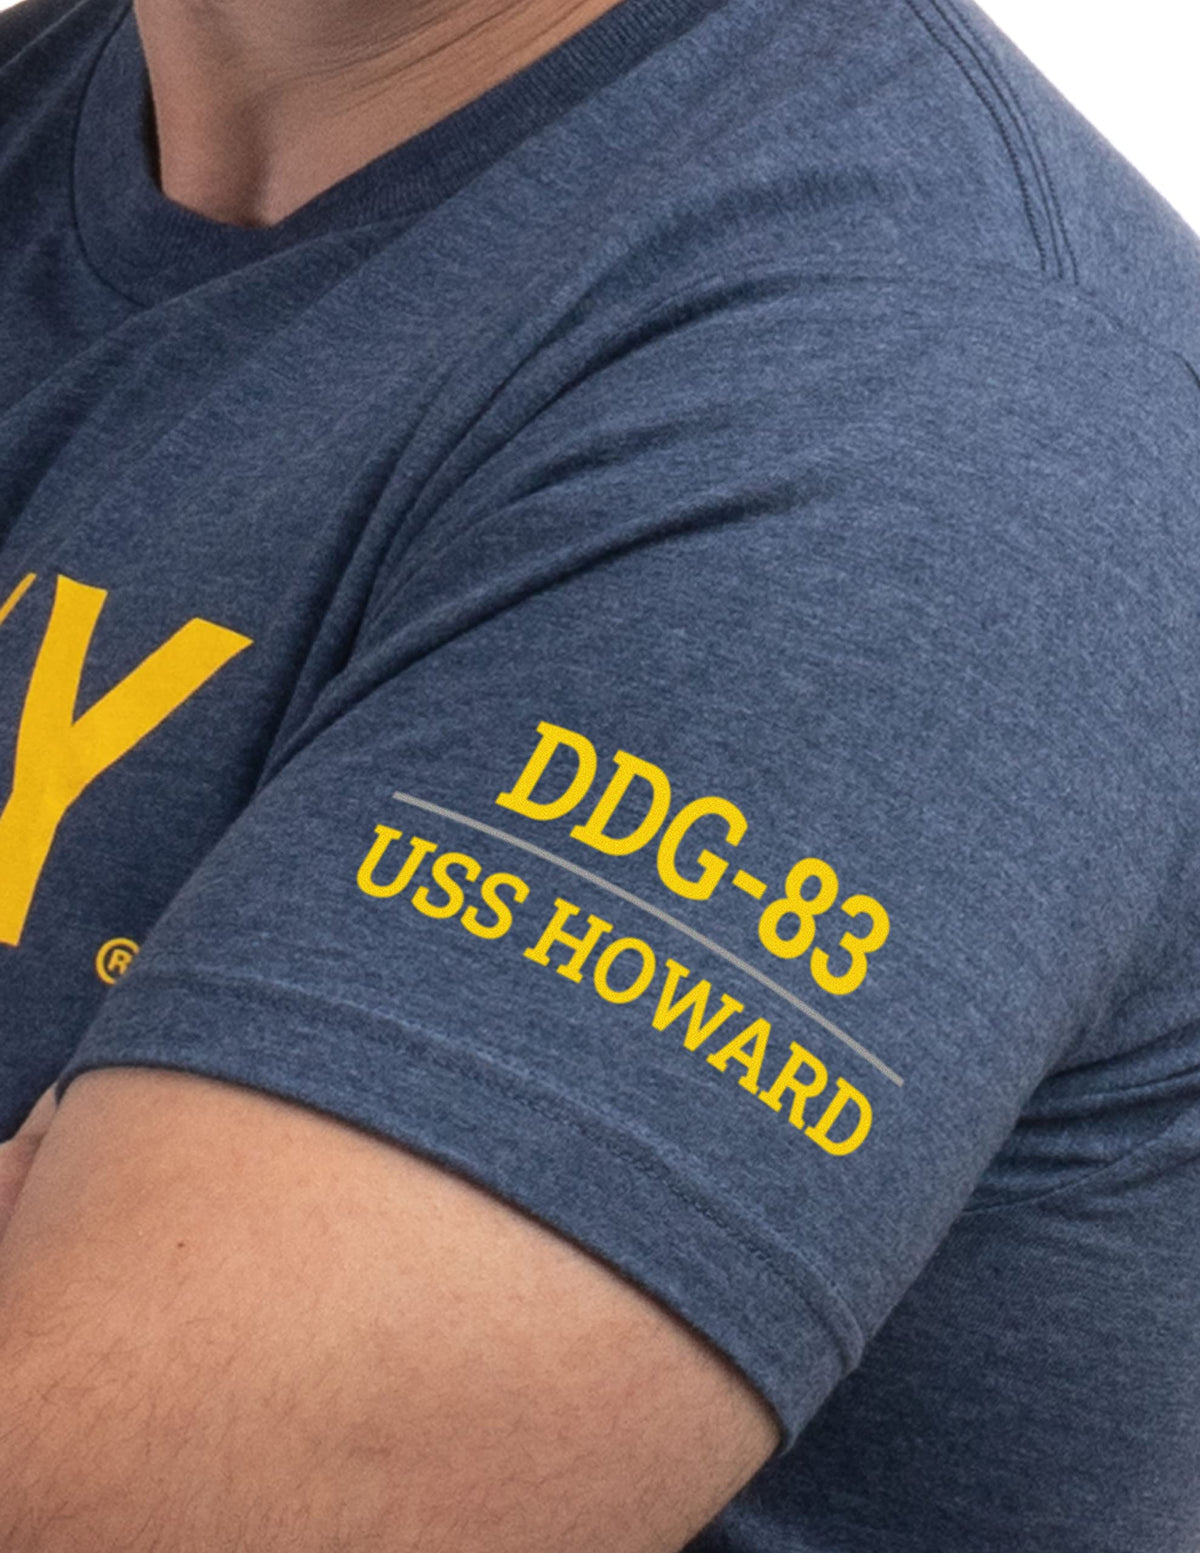 USS Howard, DDG-83 | U.S. Navy Sailor Veteran USN United States Naval T-shirt for Men Women